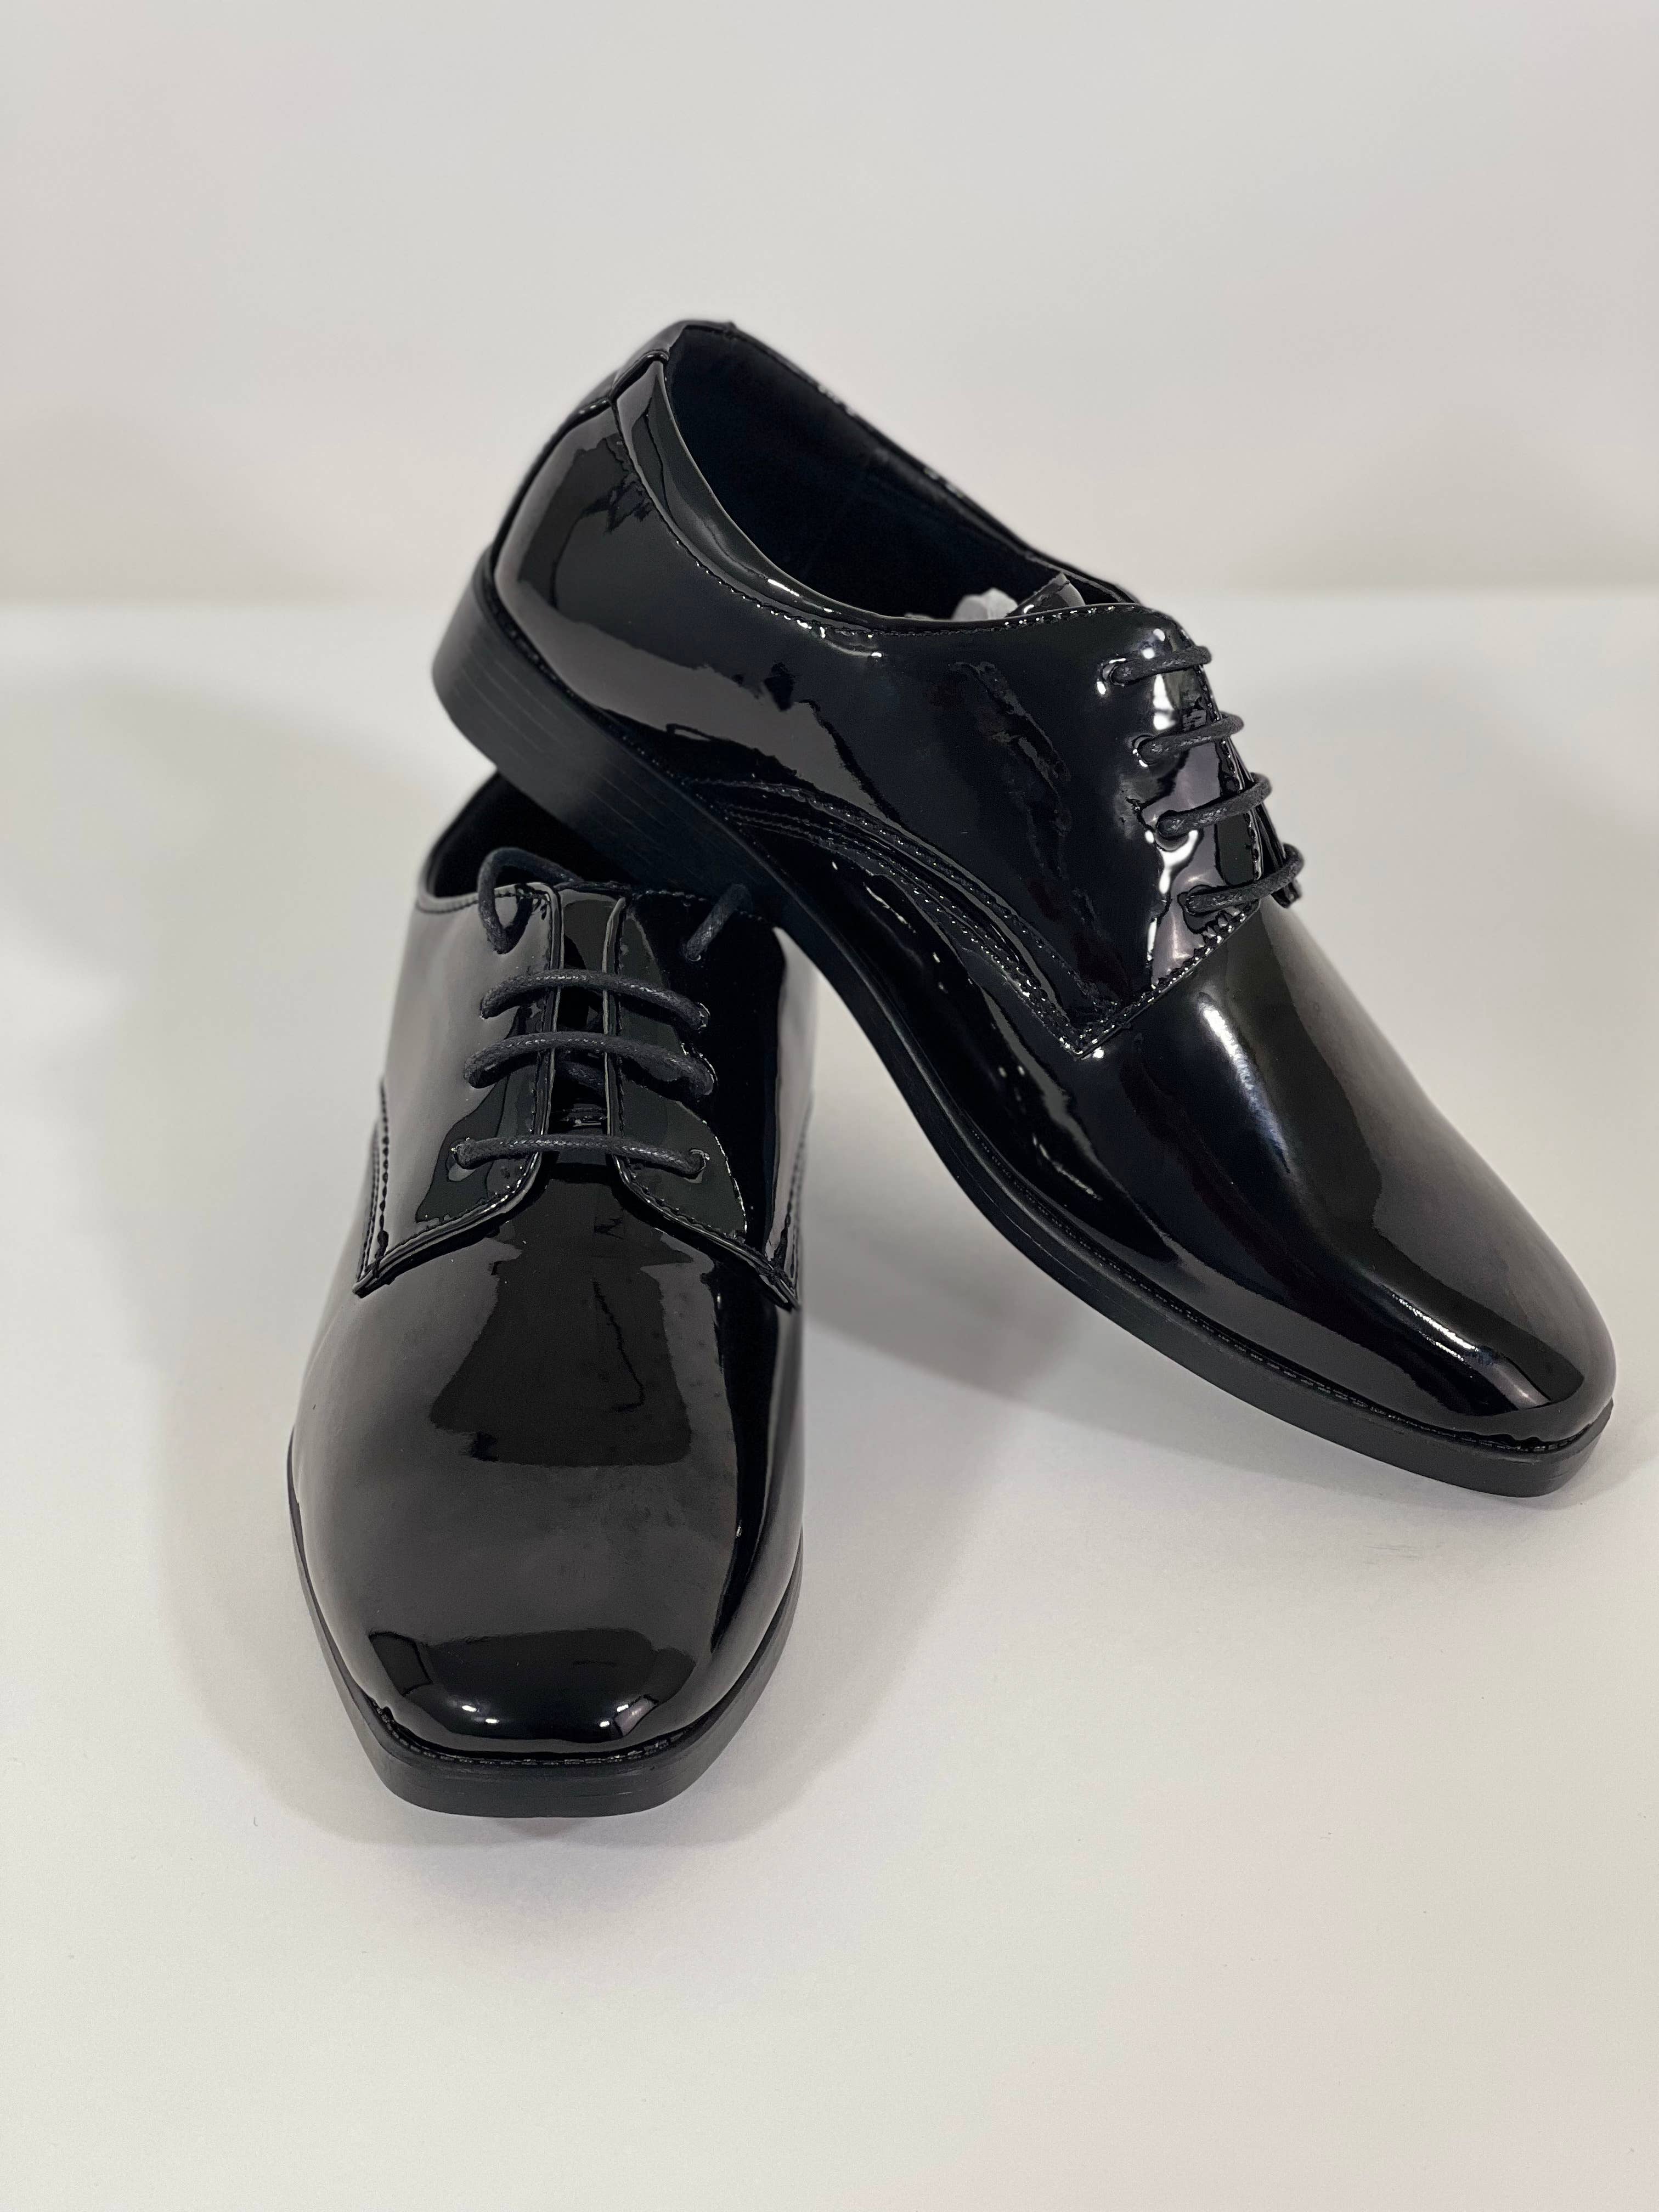 Milan Shoes - Men Dress Shoe Tuxedo Fashion Plain Pointy Square Toe Design